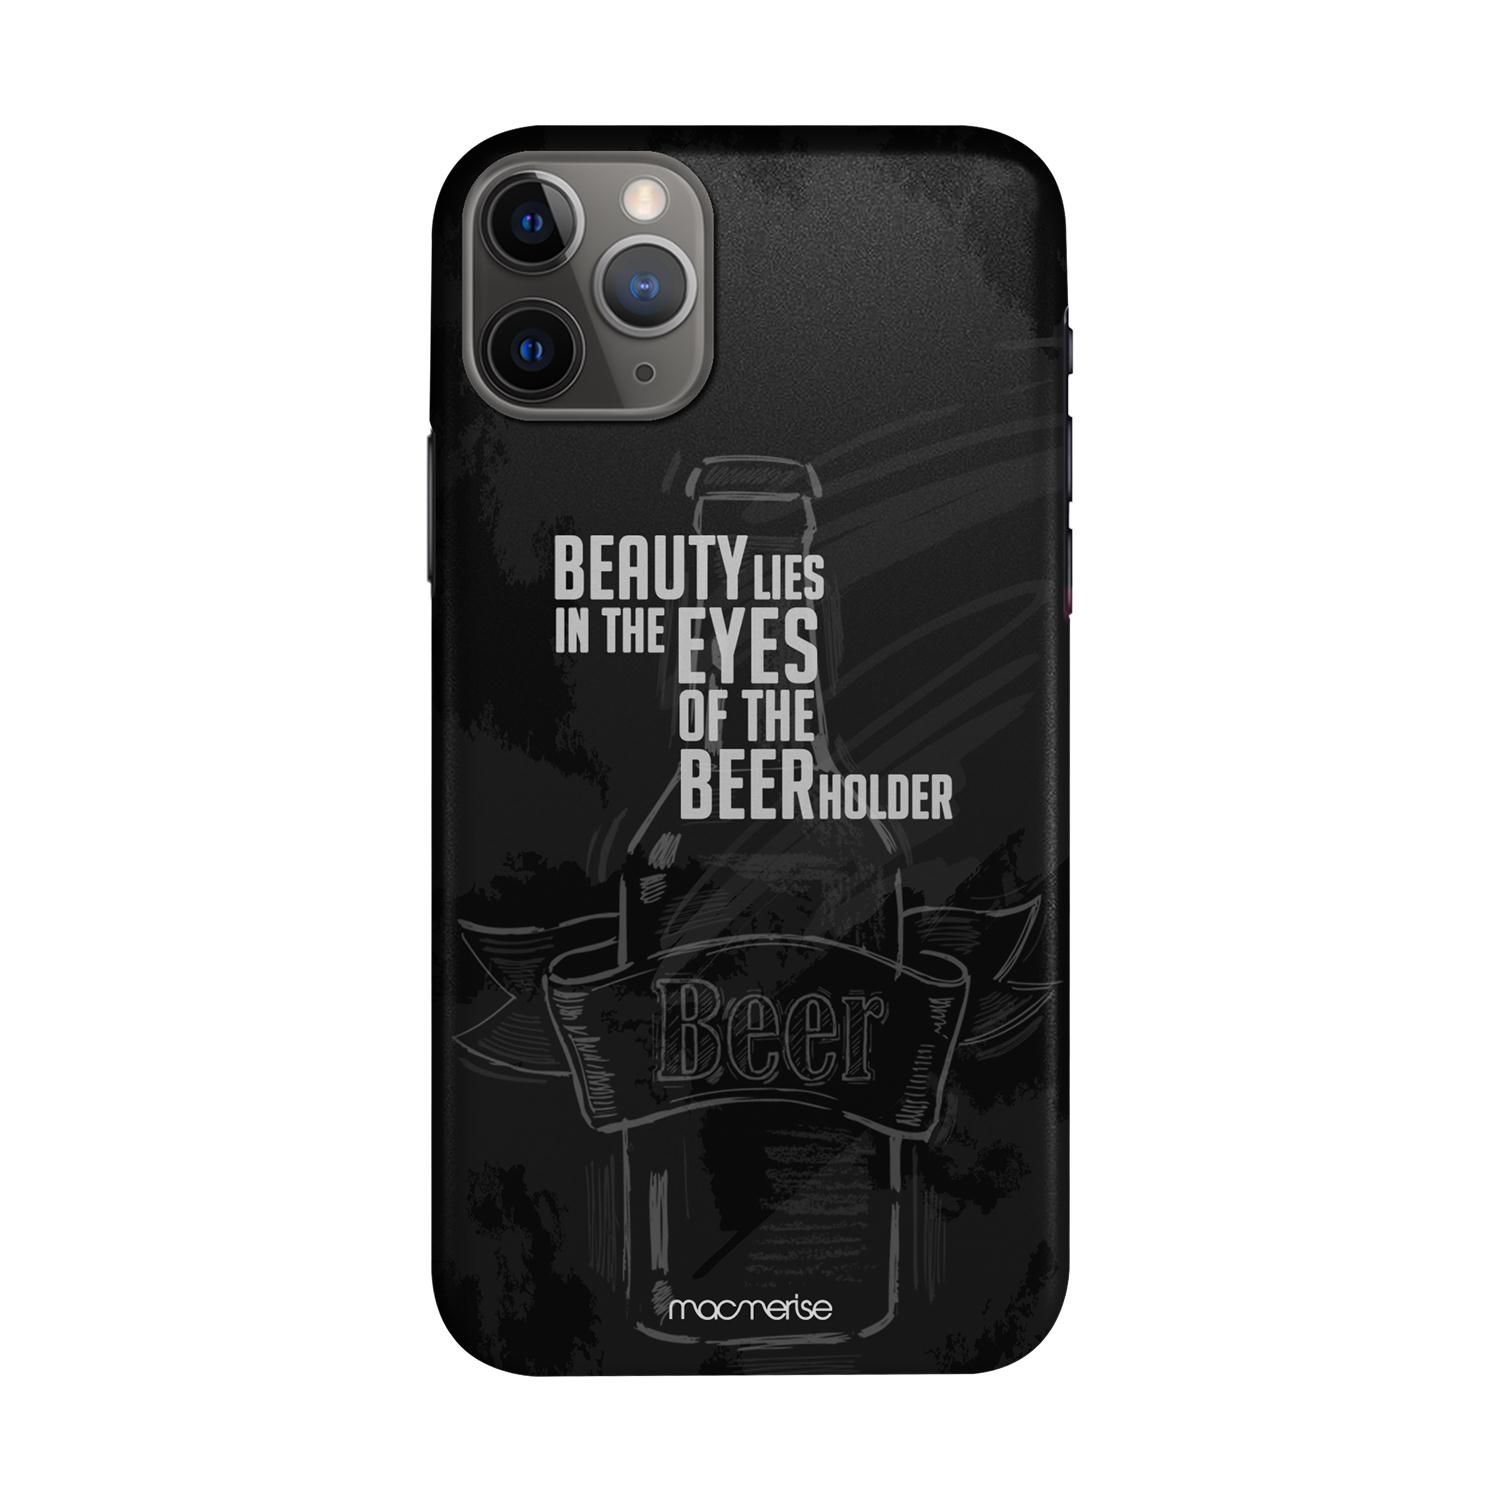 Buy Beer Holder - Sleek Phone Case for iPhone 11 Pro Max Online